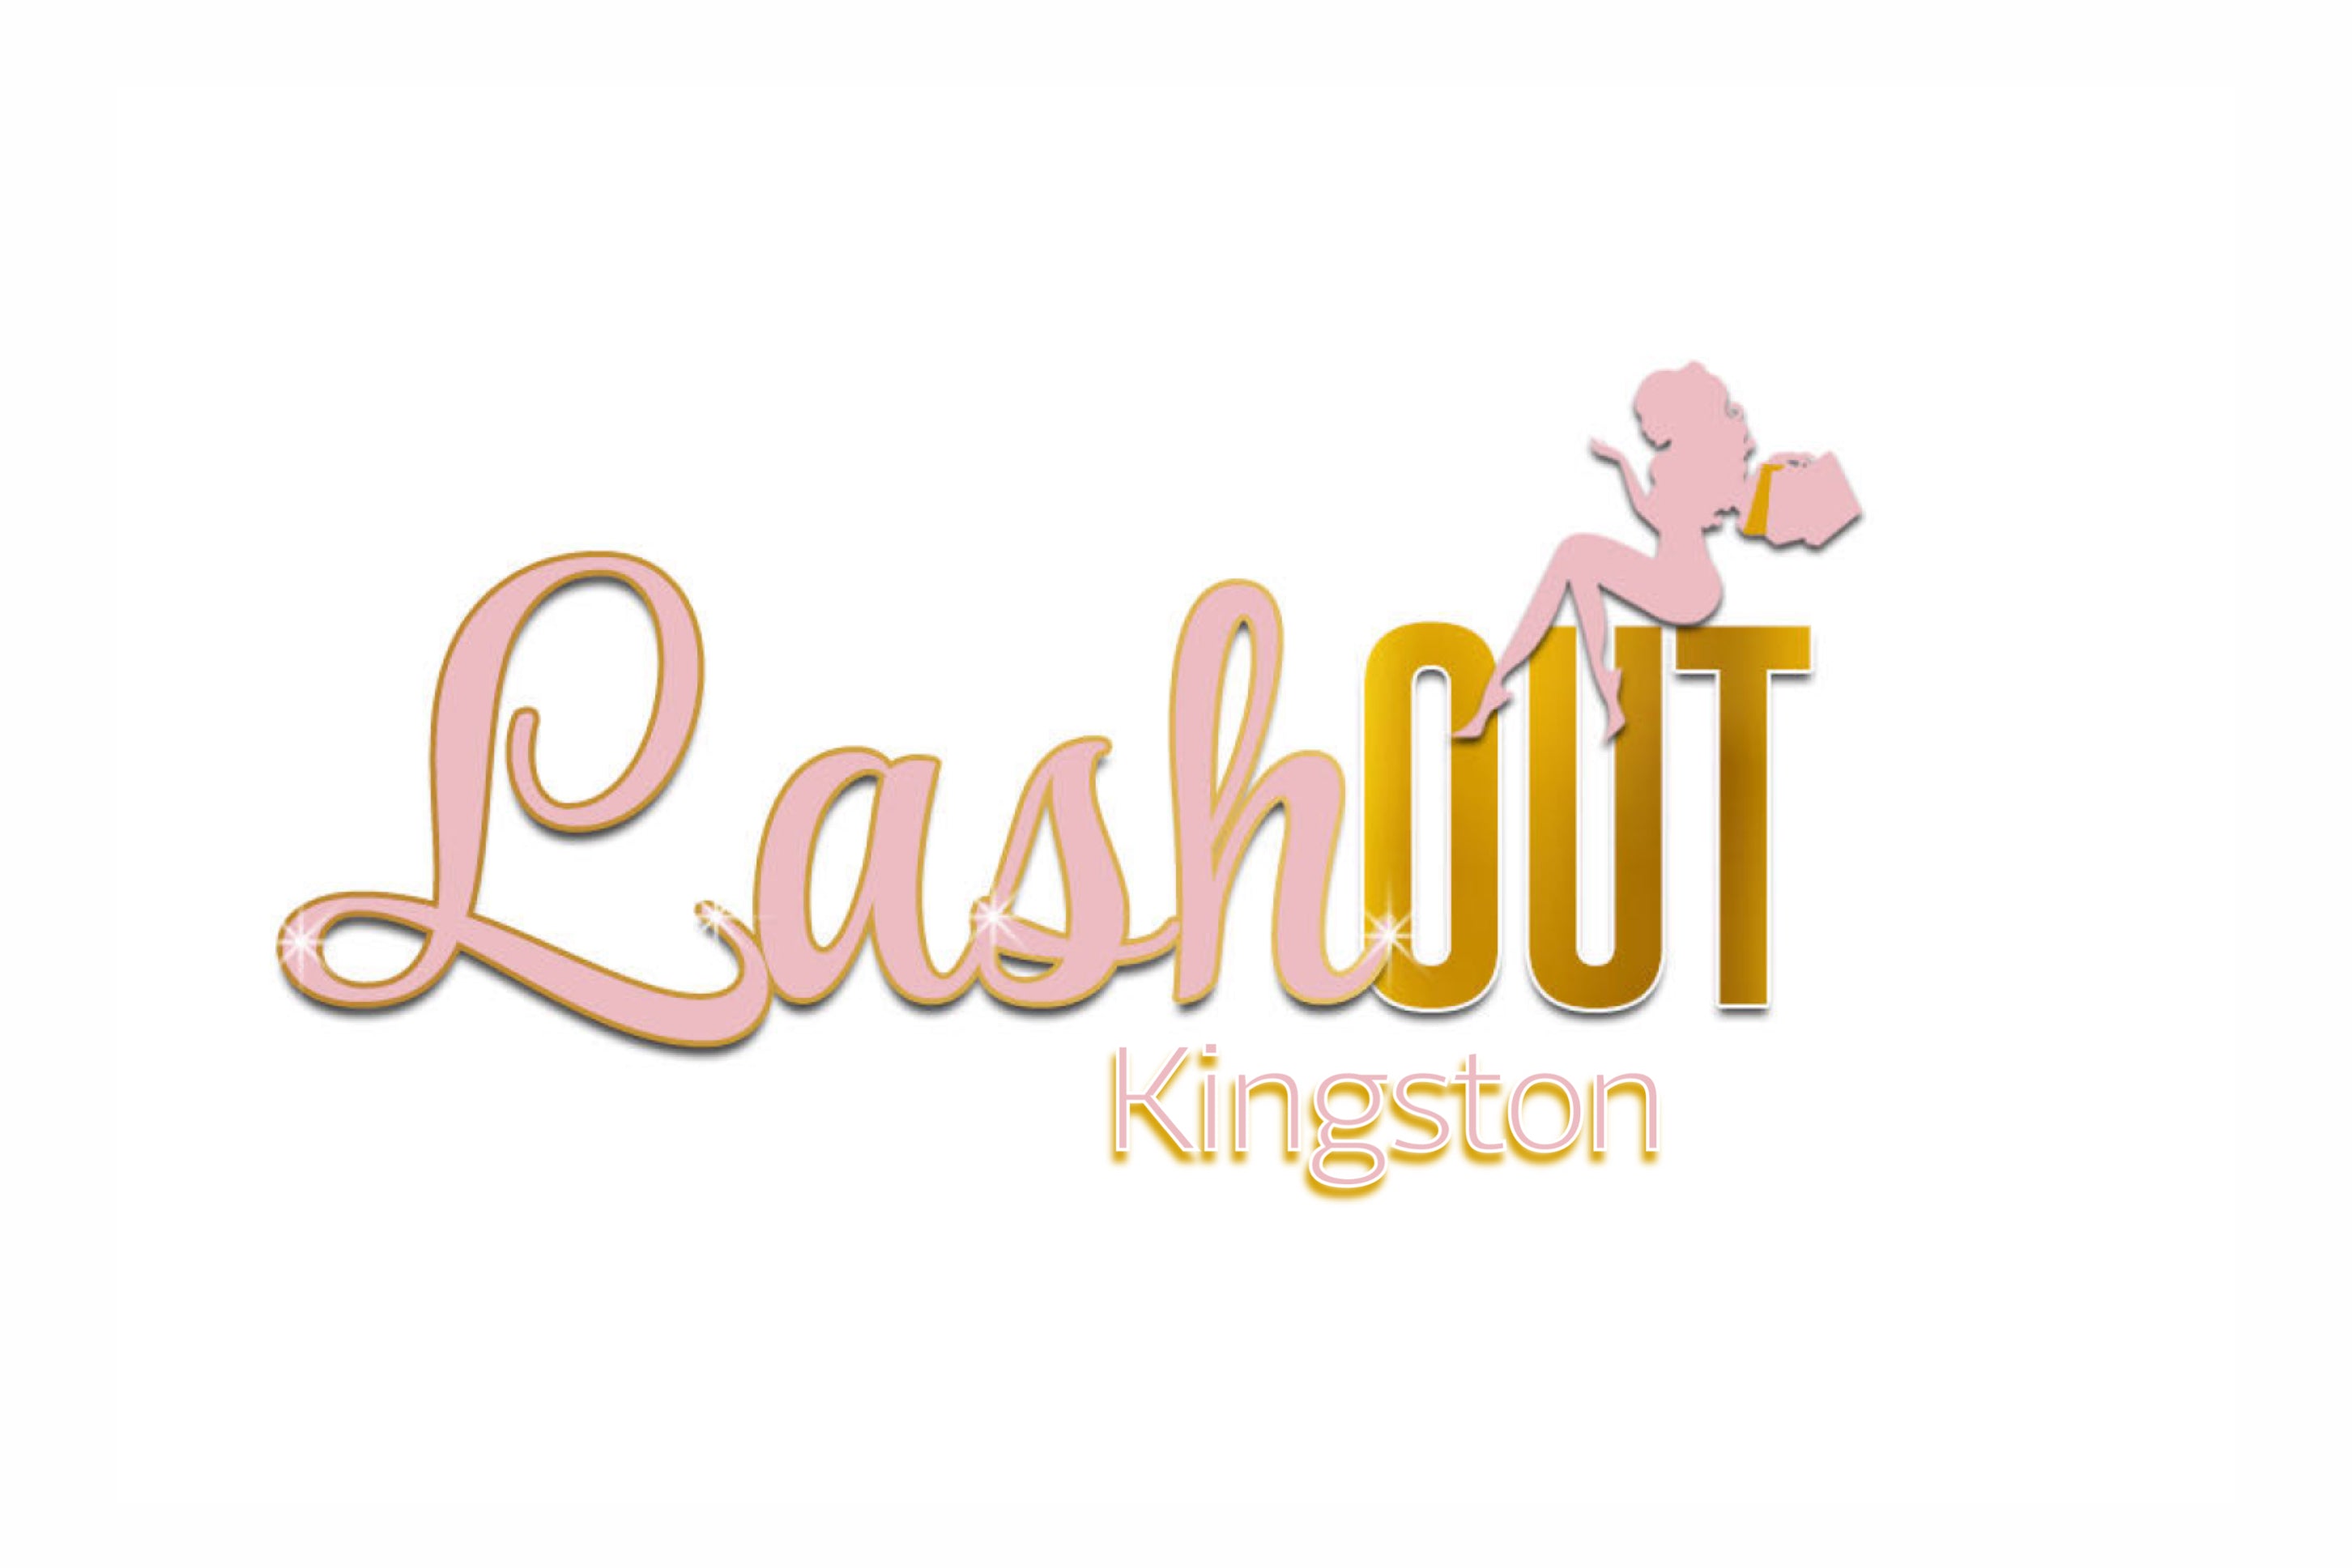 LashOut Kingston